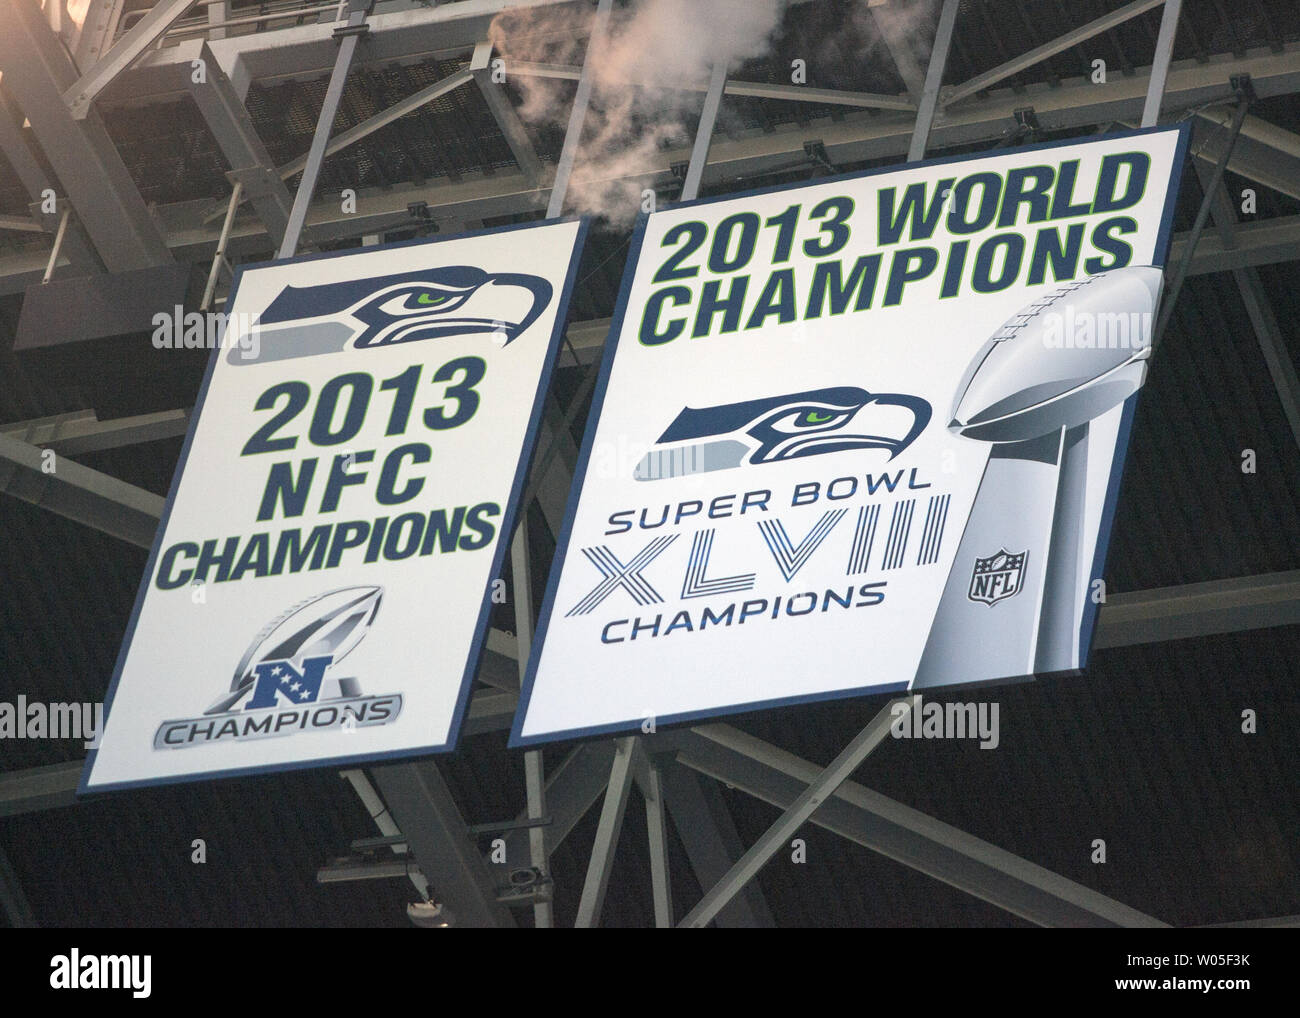 The 2013 World Championship Super Bowl XLVIII banner is displayed